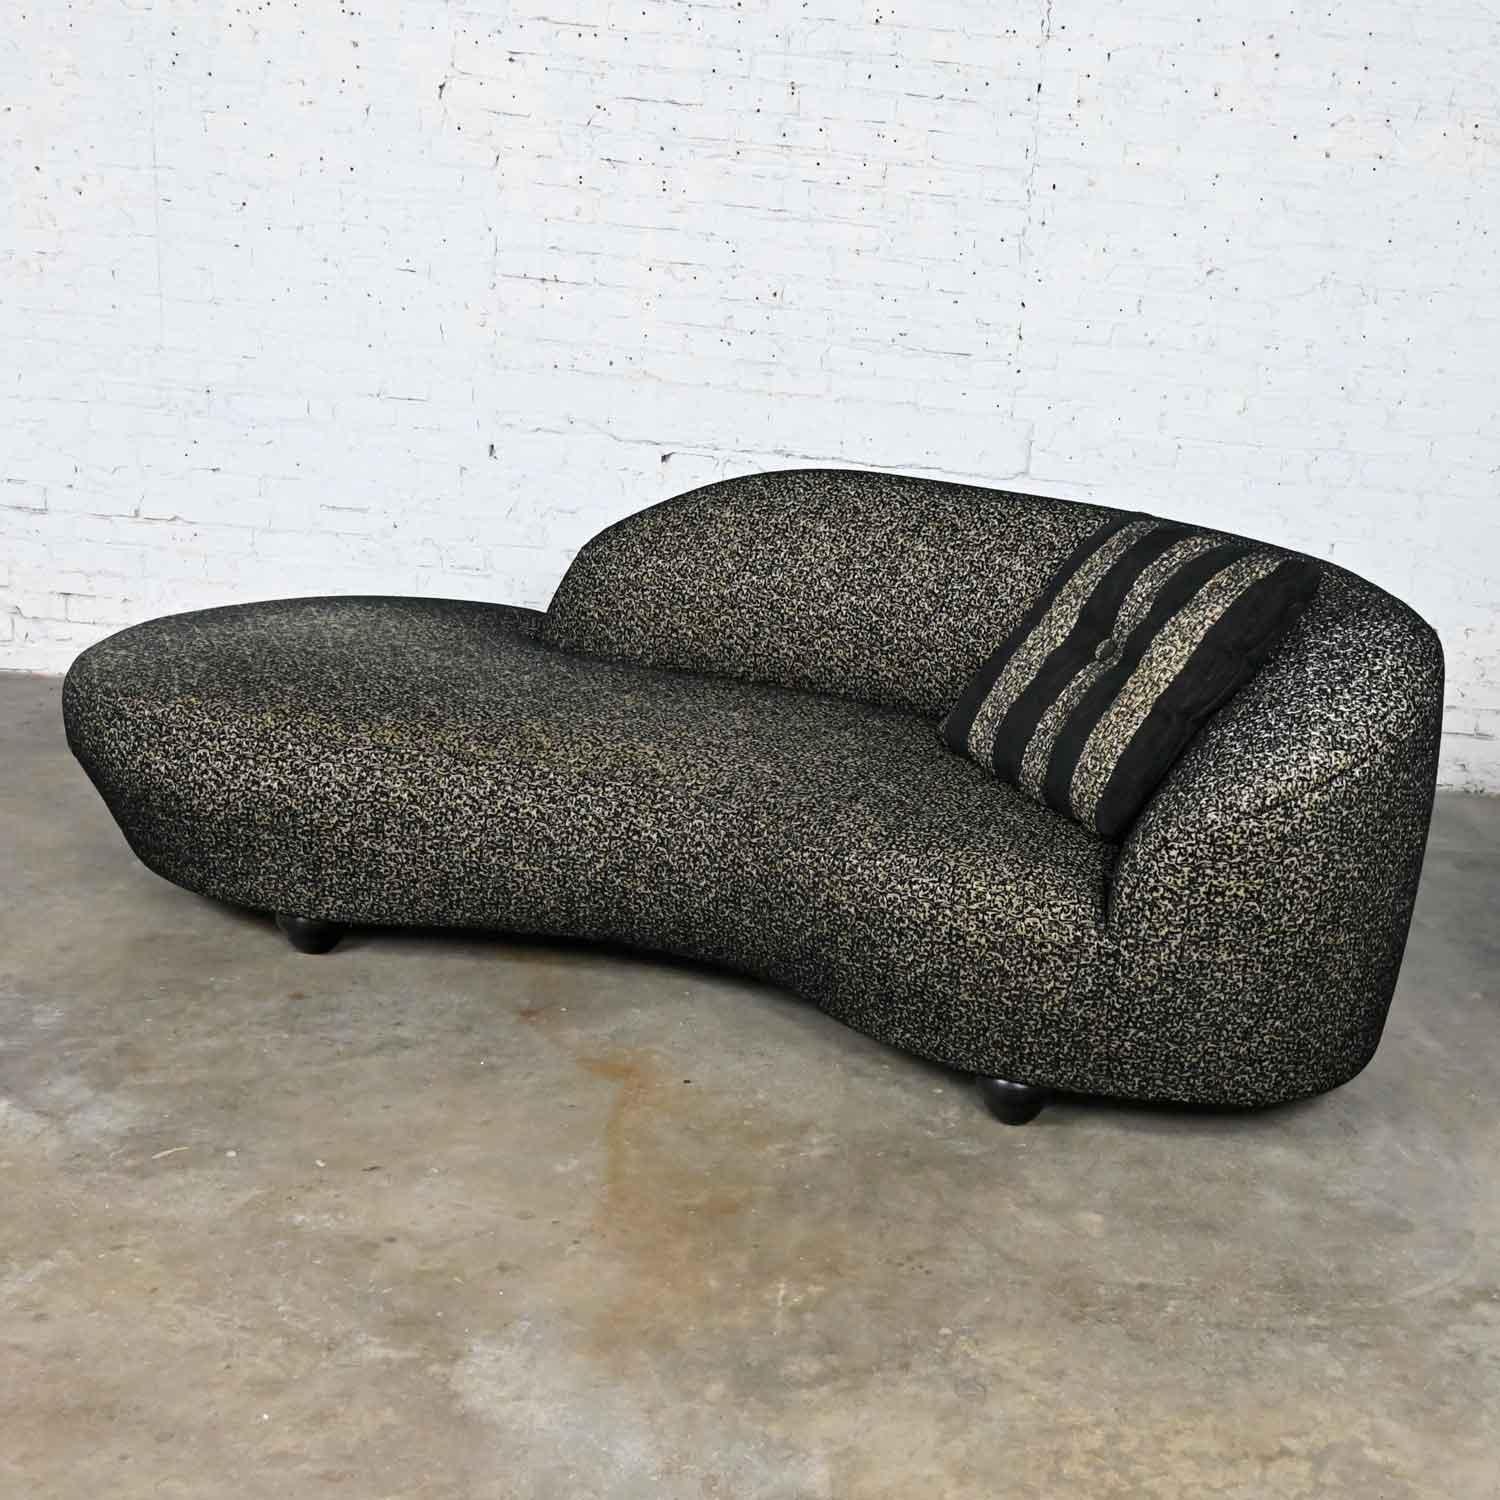 Postmodern Black & Khaki Sort of Animal Print Serpentine Cloud-Like Chaise Sofa For Sale 2